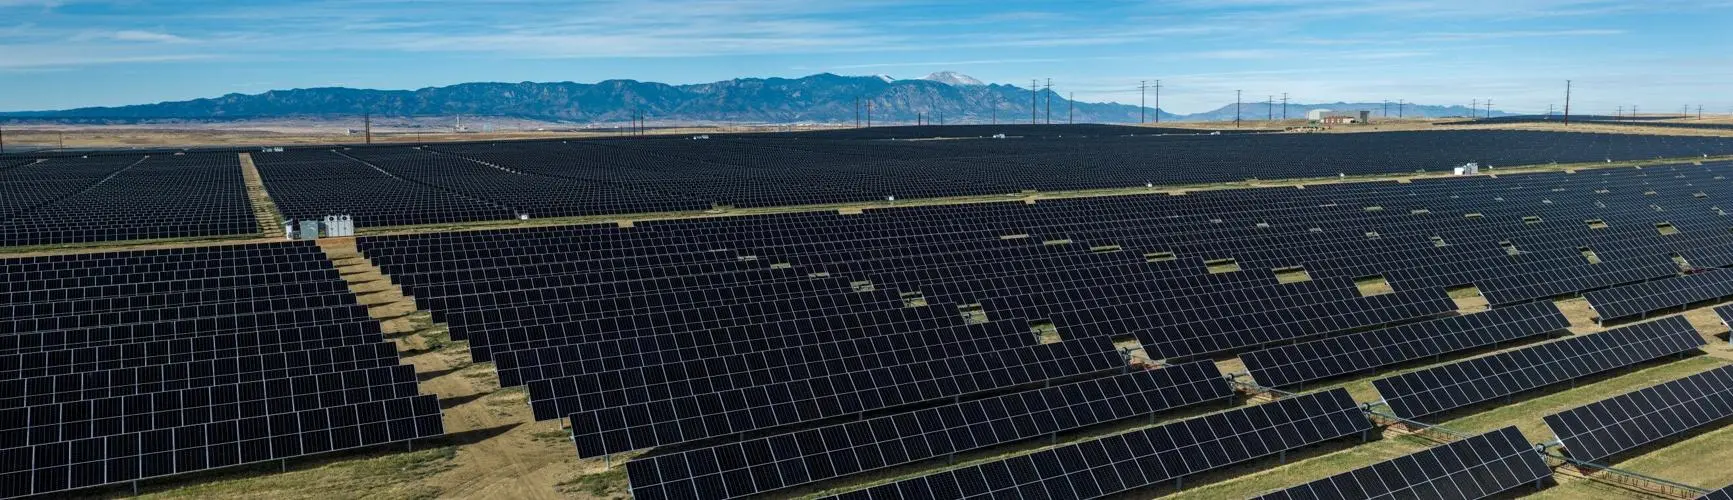 colorado springs solar energy renewable - How much of Colorado's energy is renewable